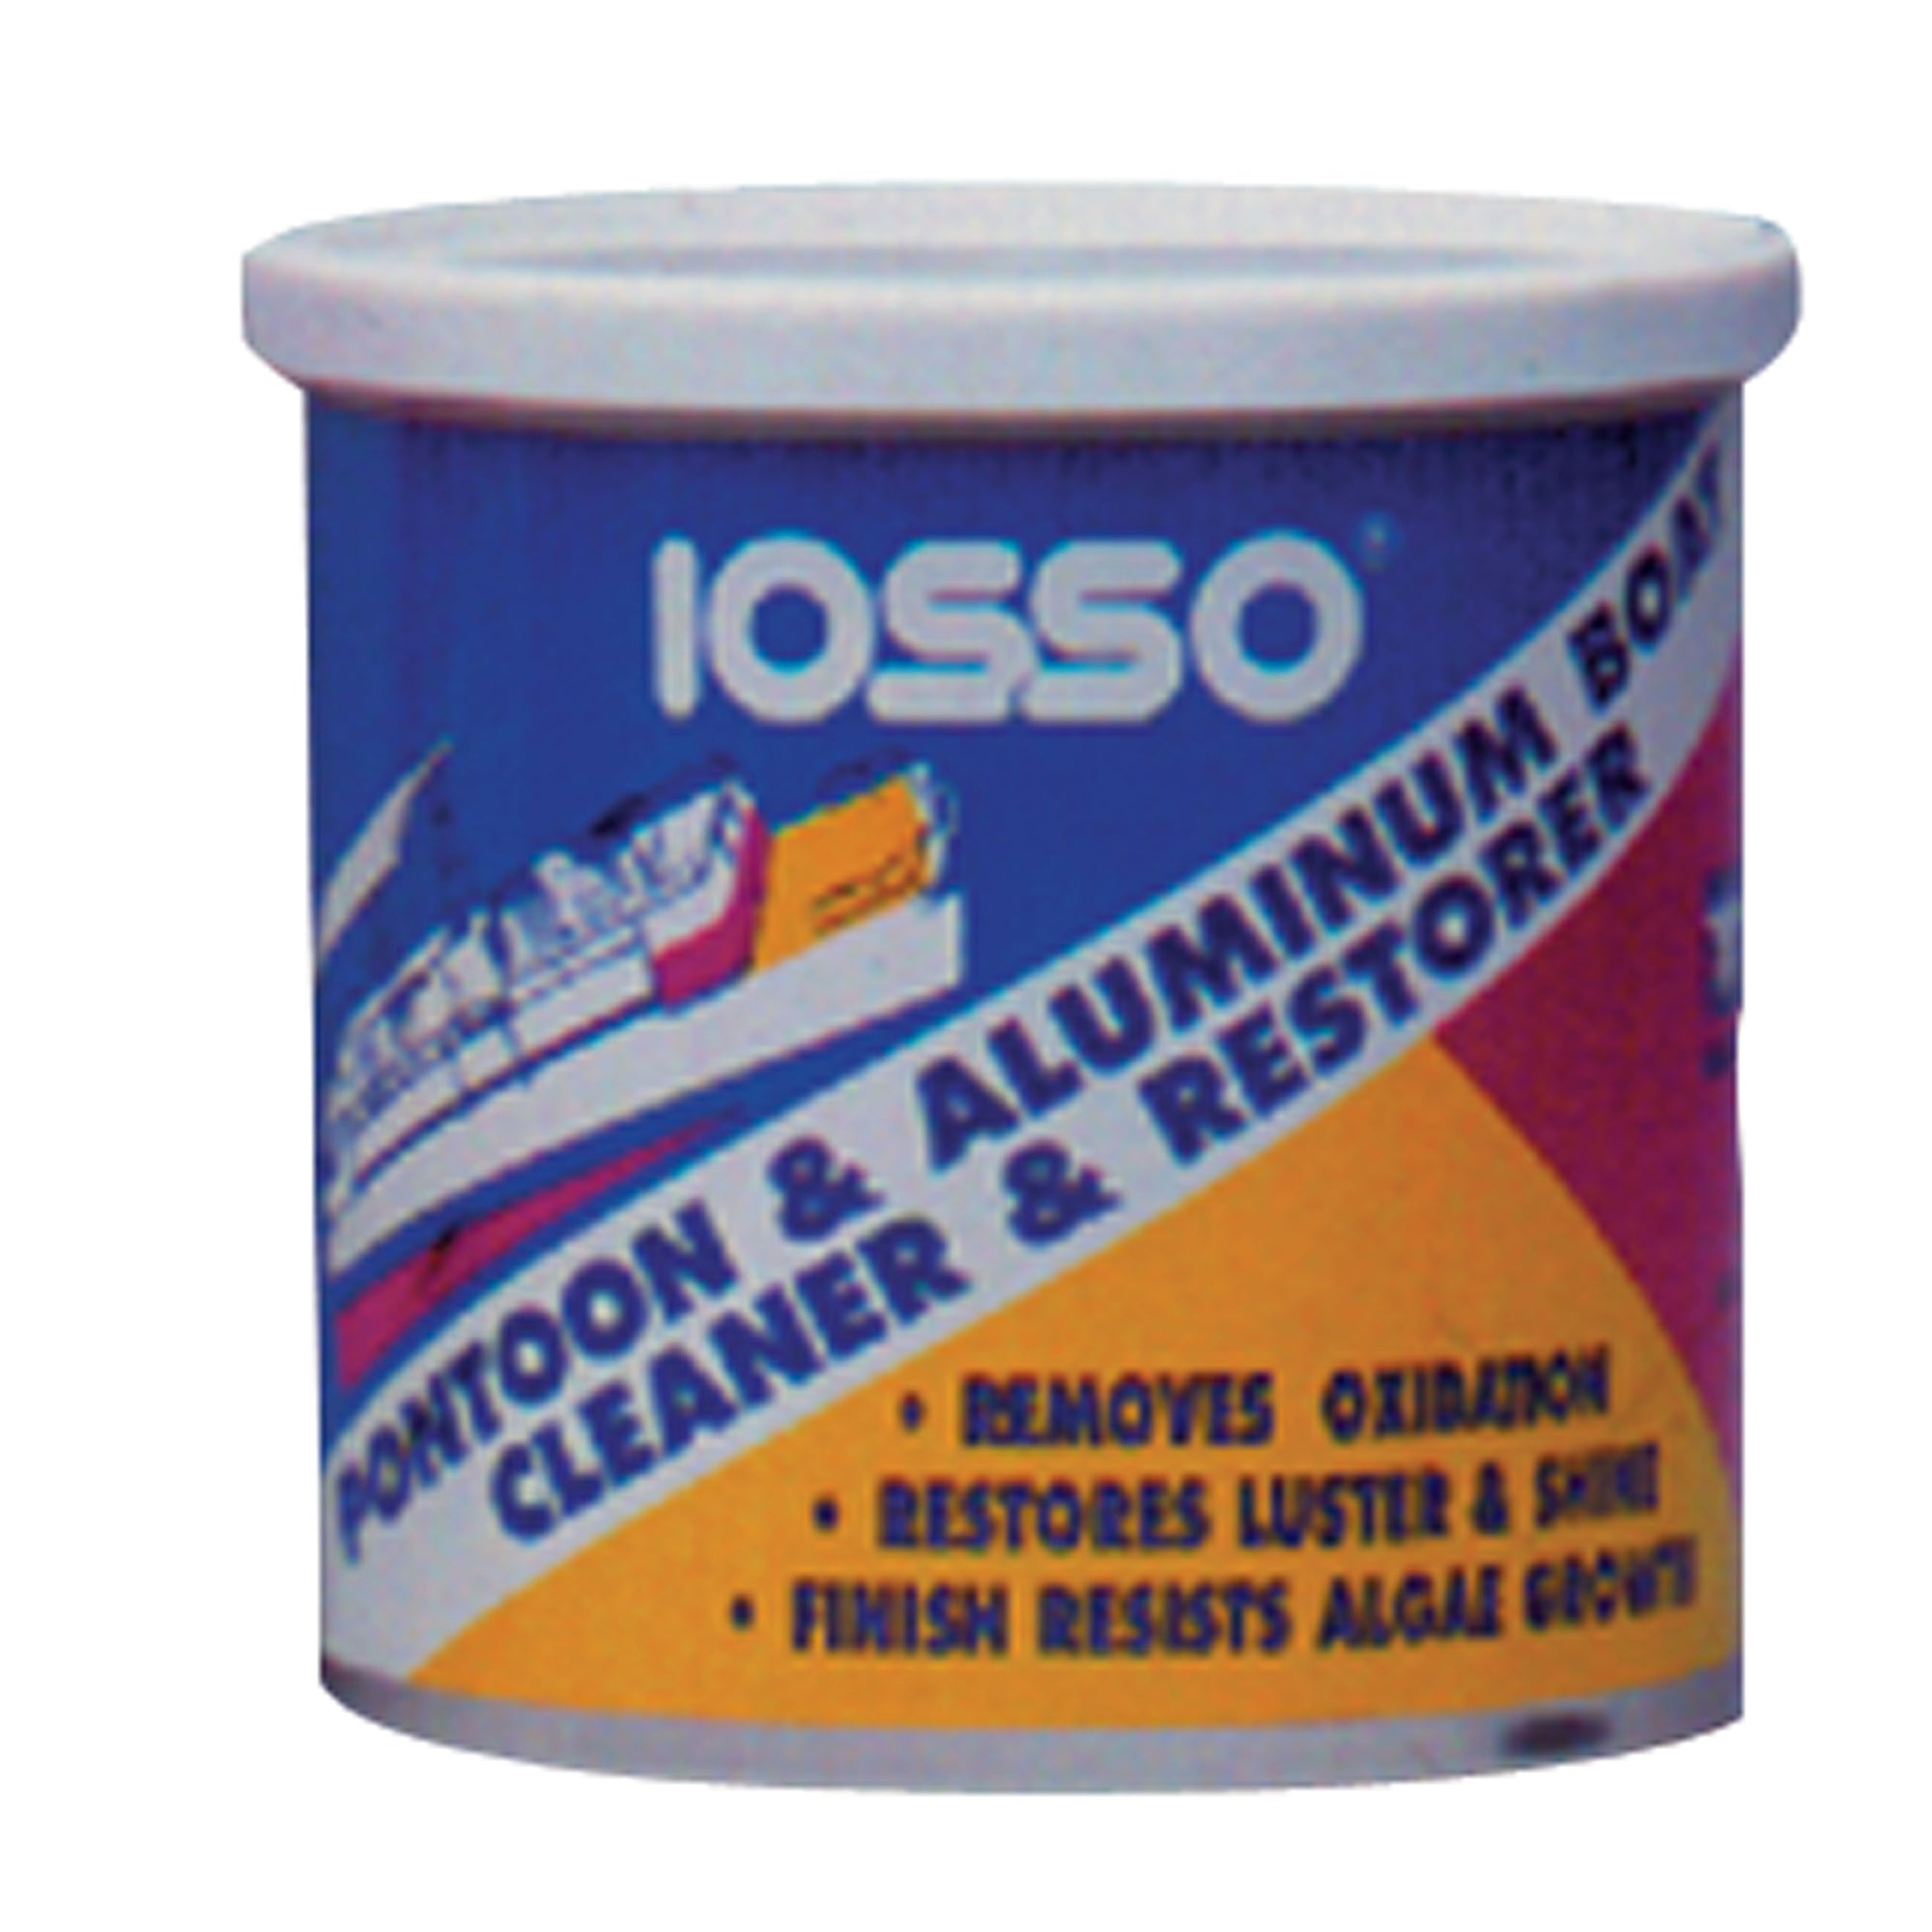 Iosso 10106 Pontoon Polish - 1 lb.